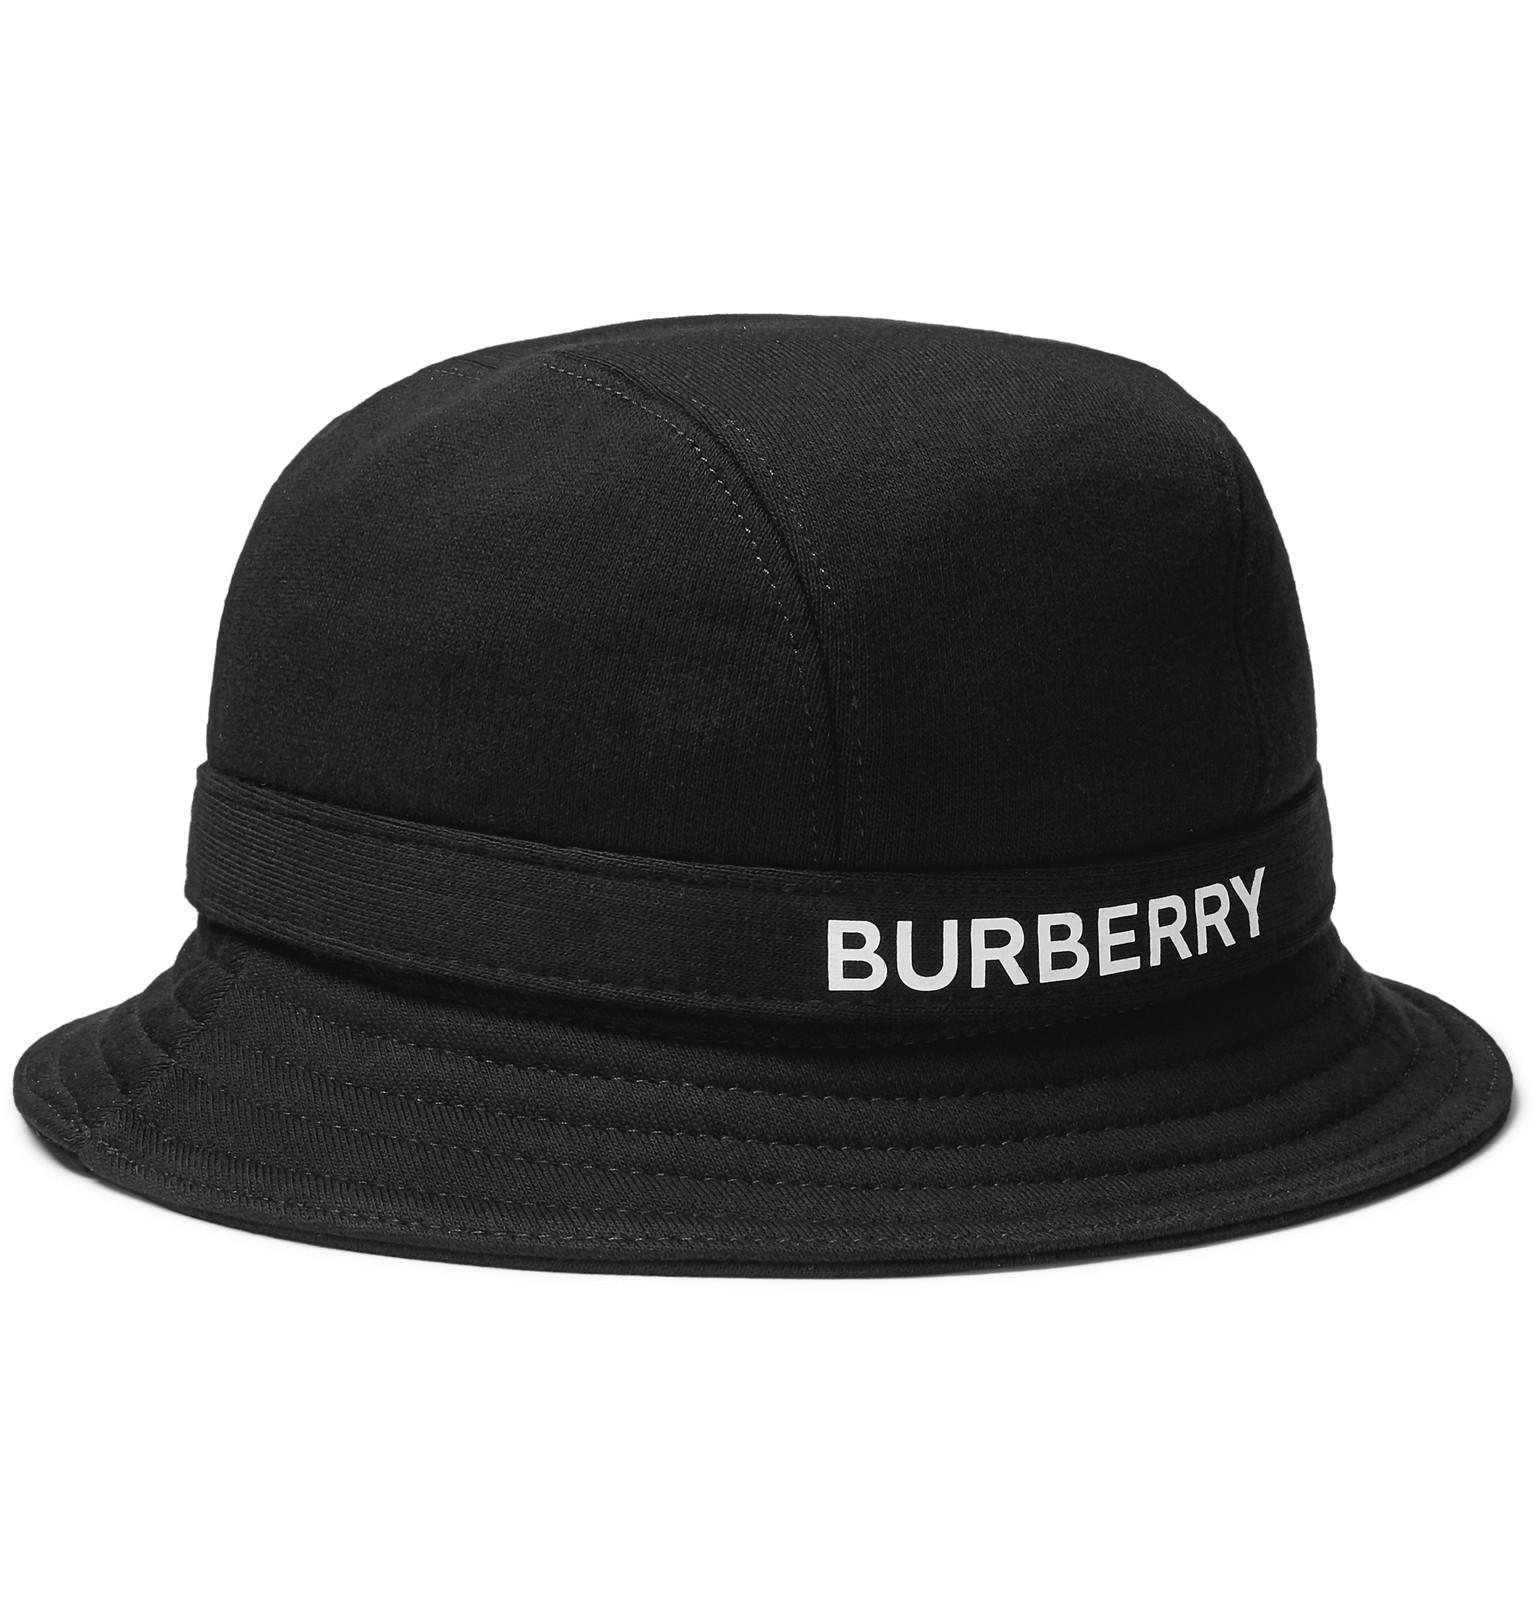 Burberry Cotton Jersey Bucket Hat in Black for Men - Lyst